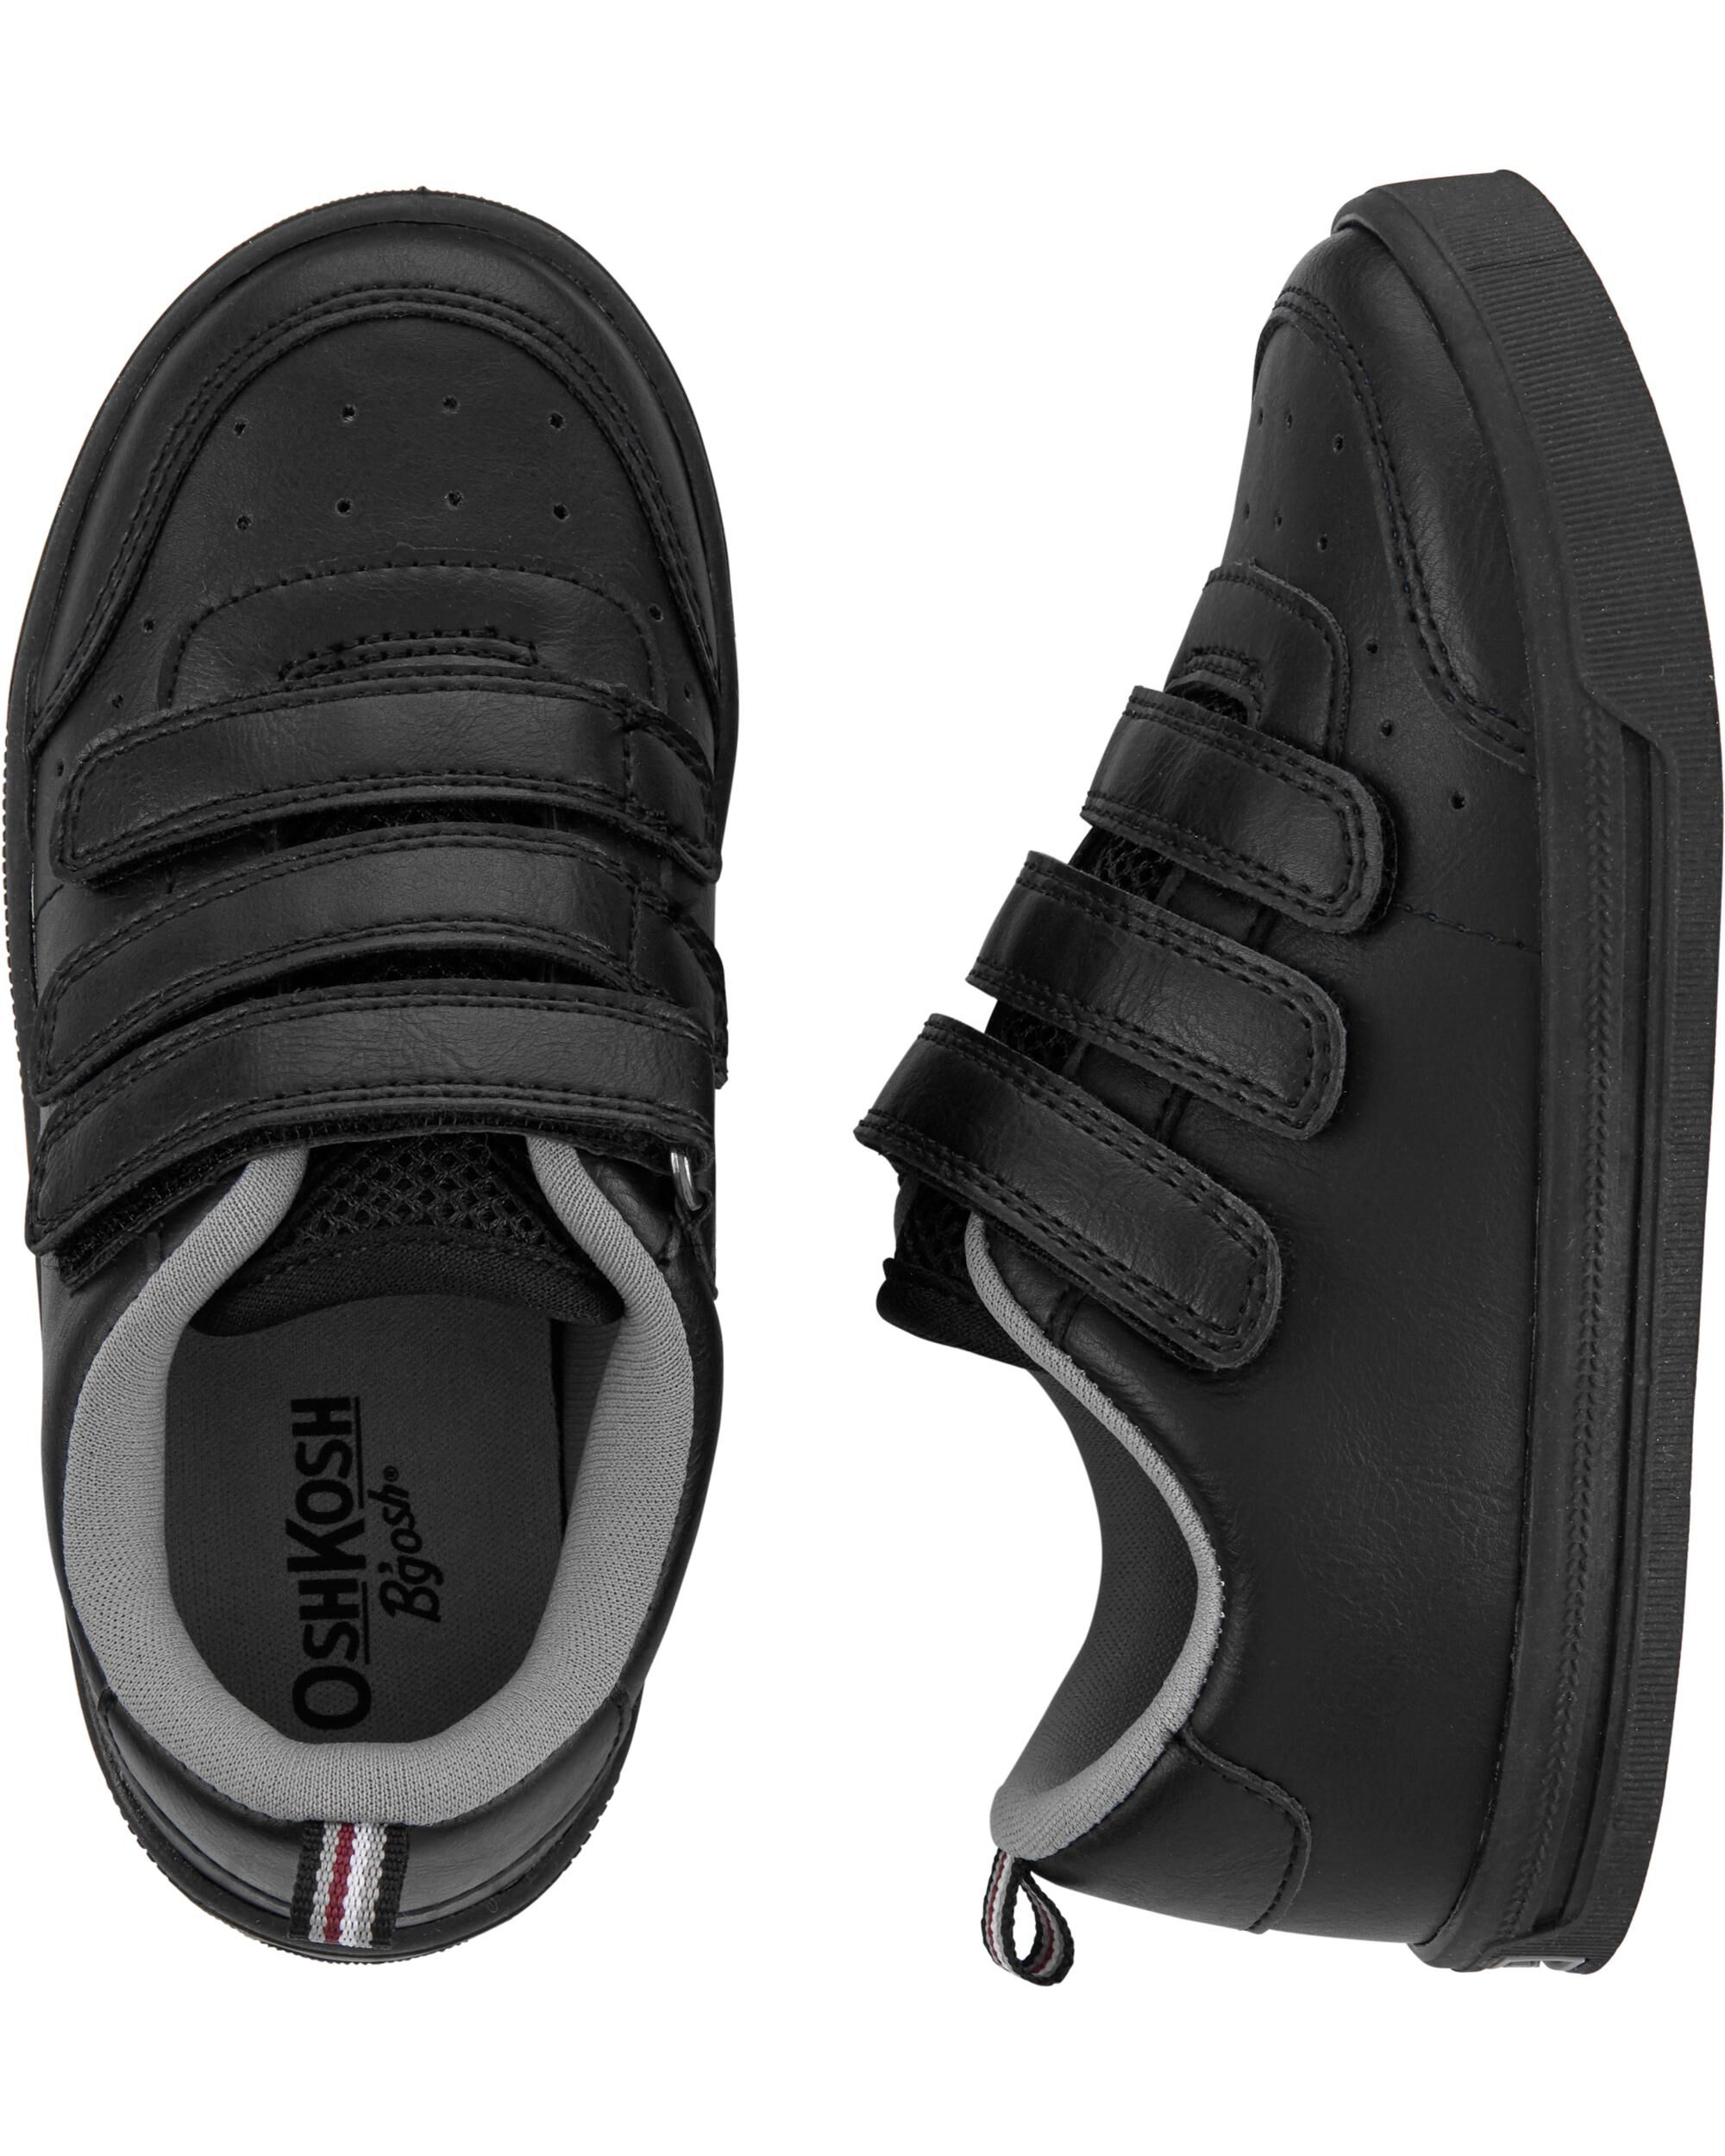 black uniform sneakers